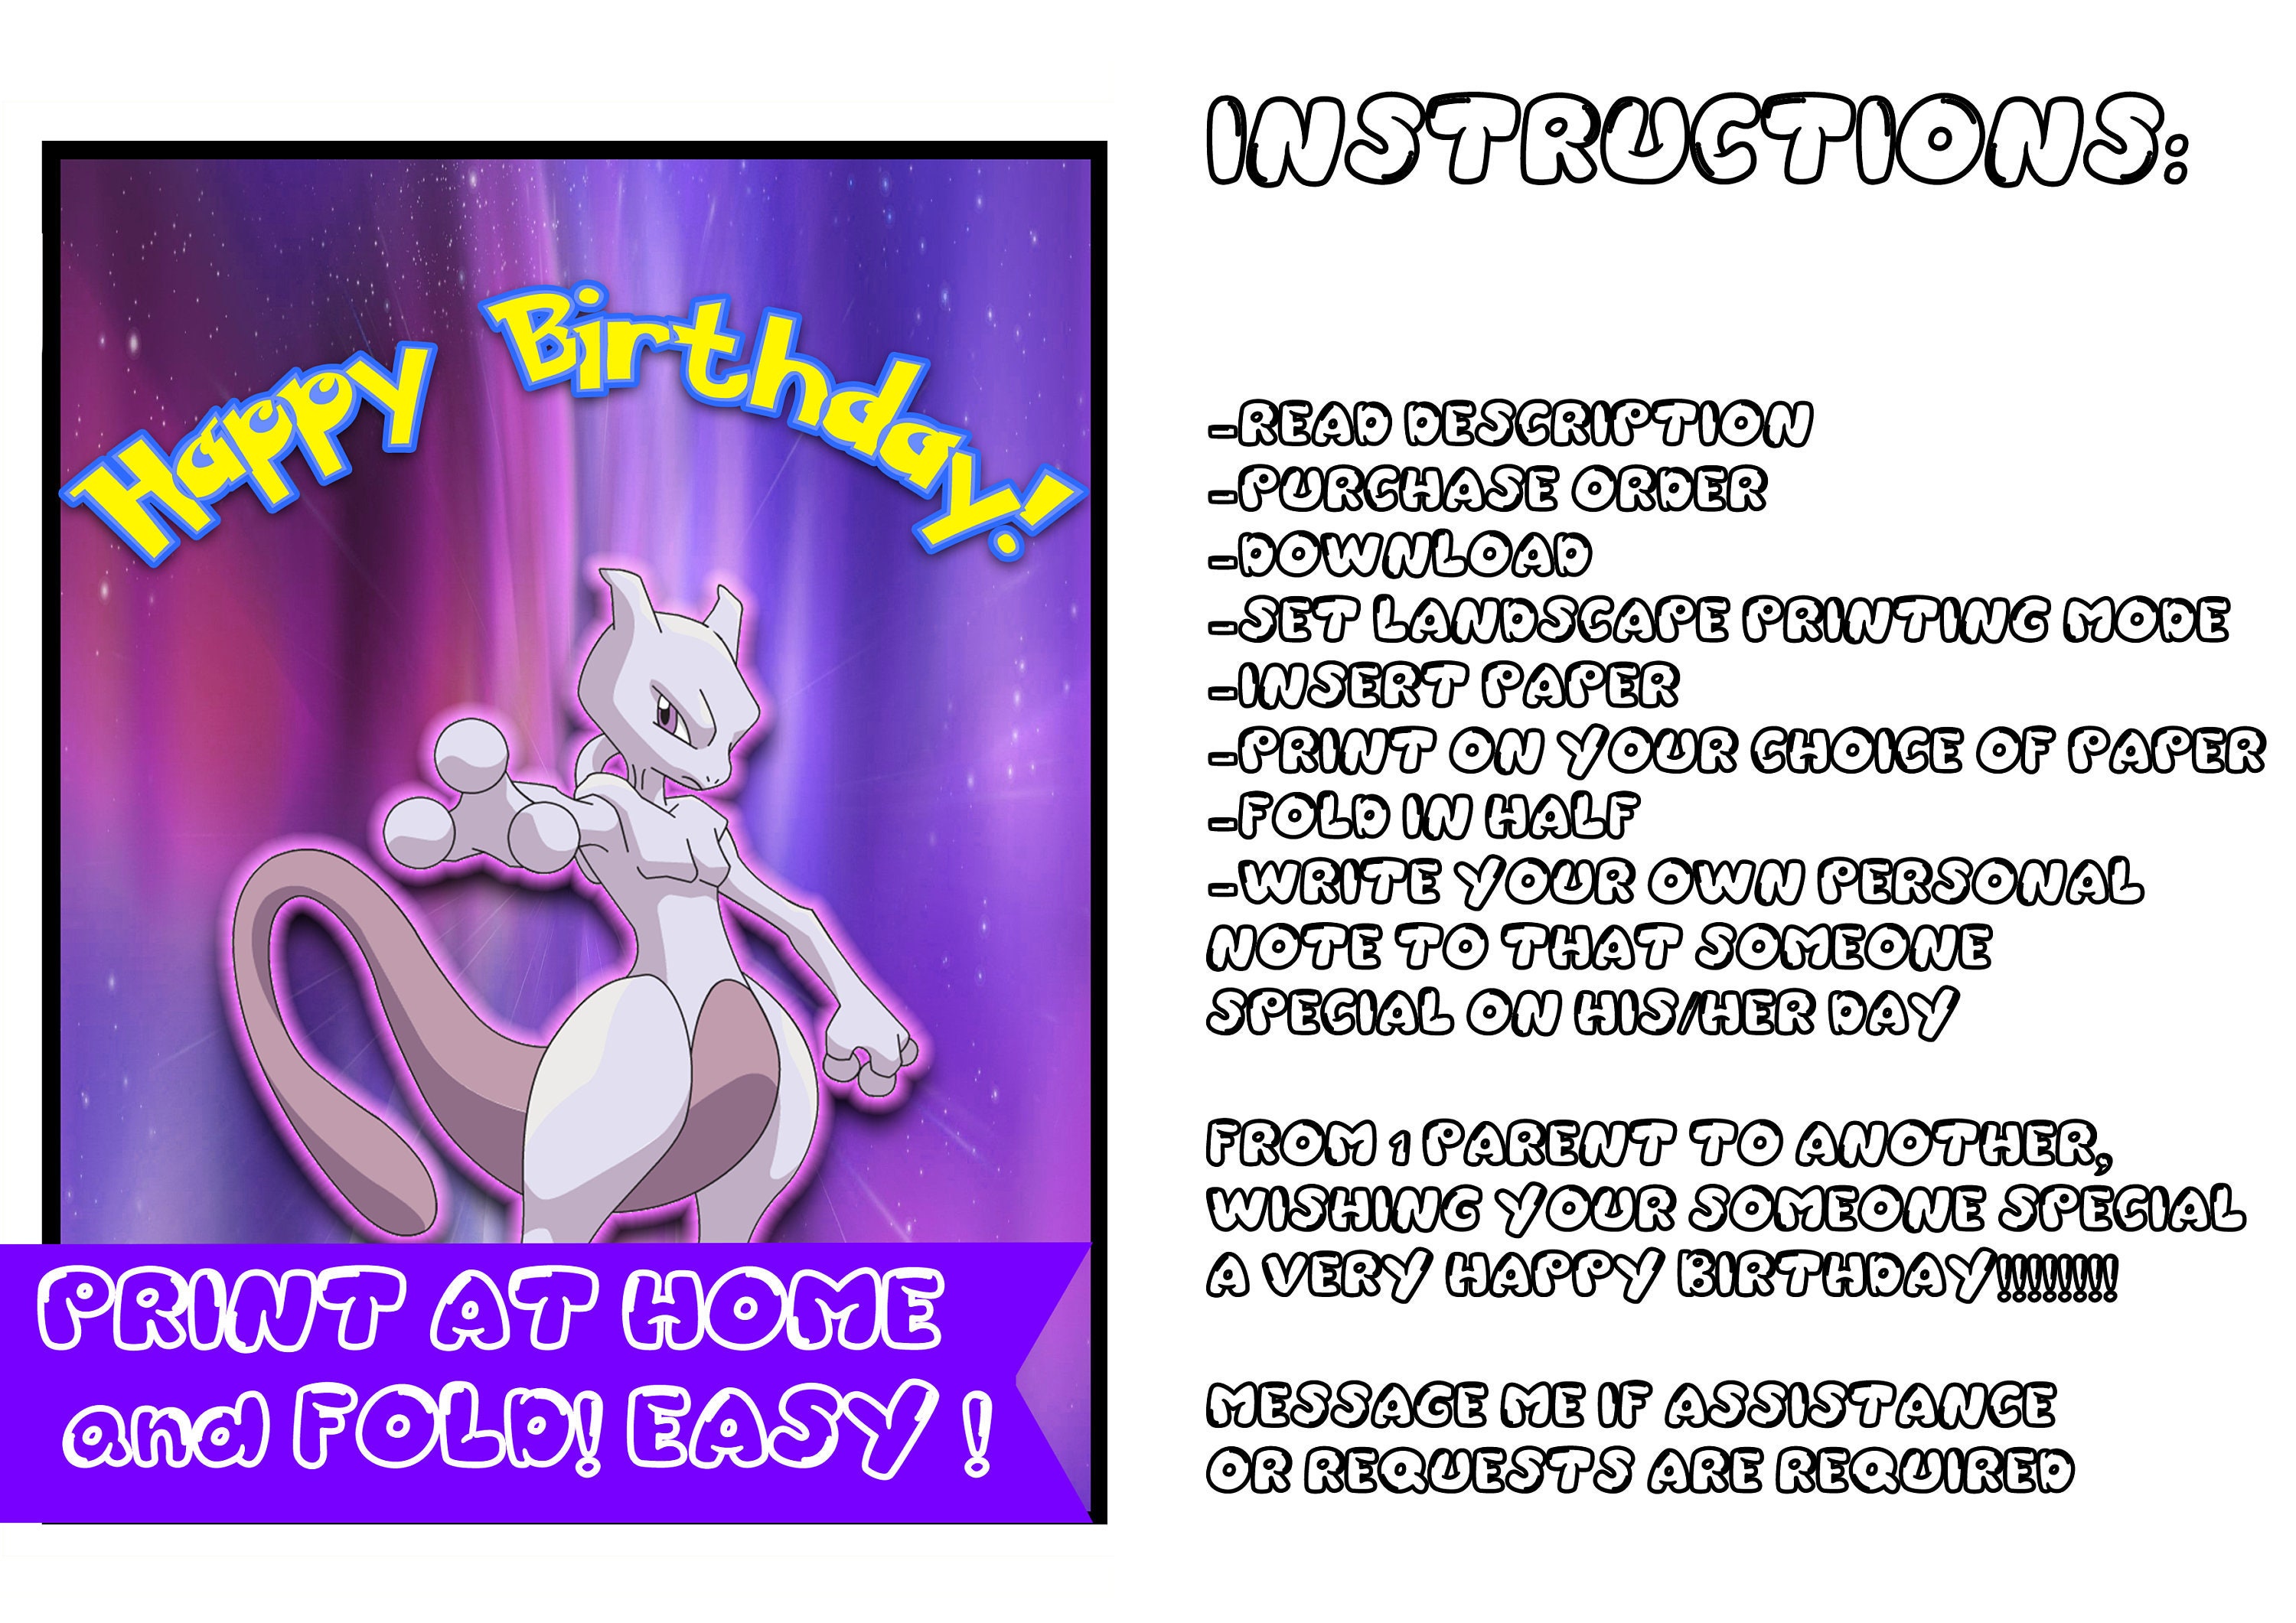 Tarjeta de cumpleaños de Pikachu - tarjeta de cumpleaños Pokemon - tarjeta  de cumpleaños digital - descargar e imprimir - nota personalizada - feliz